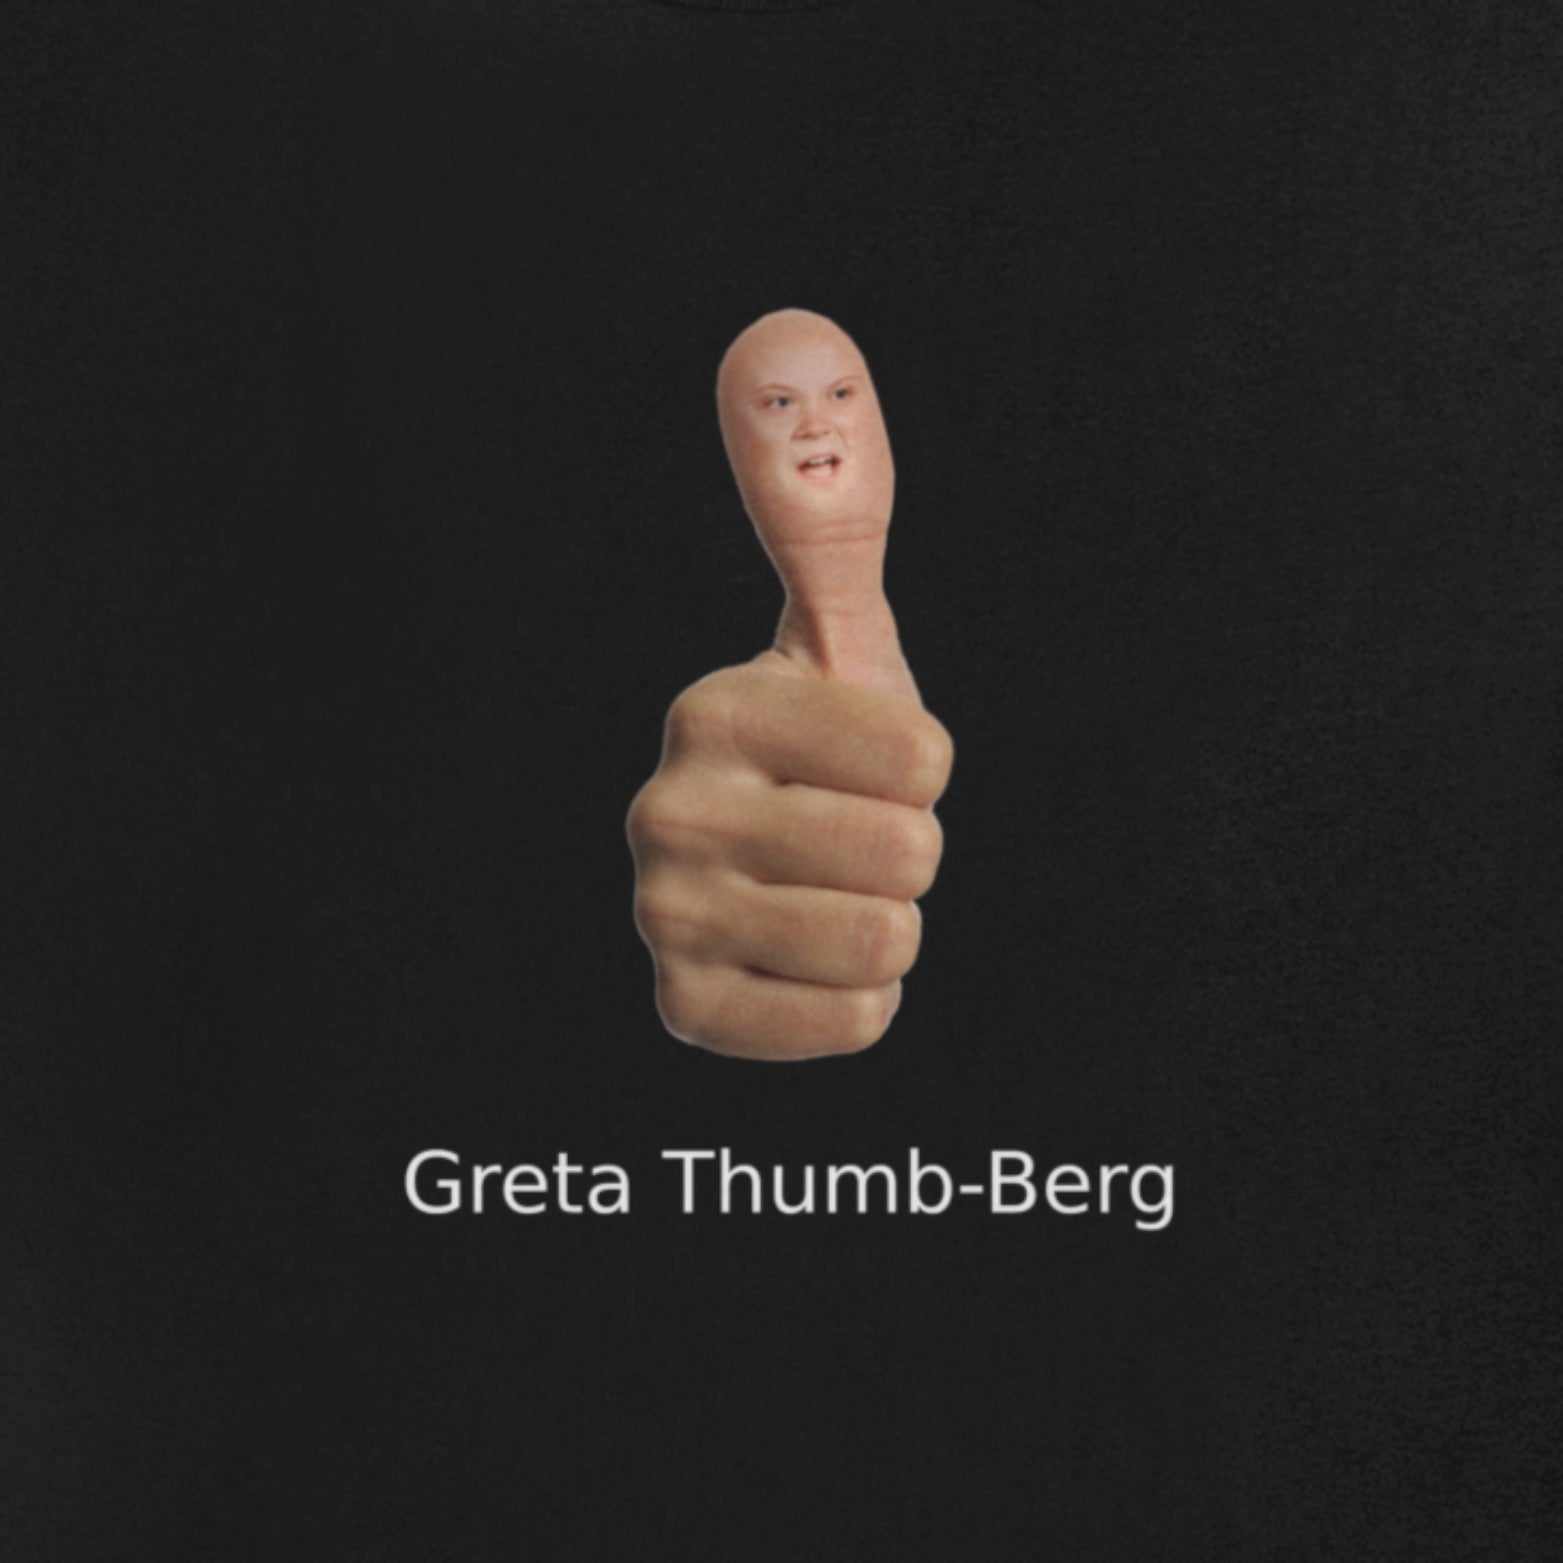 Monday Meme Tee, Greta Thumb-Berg